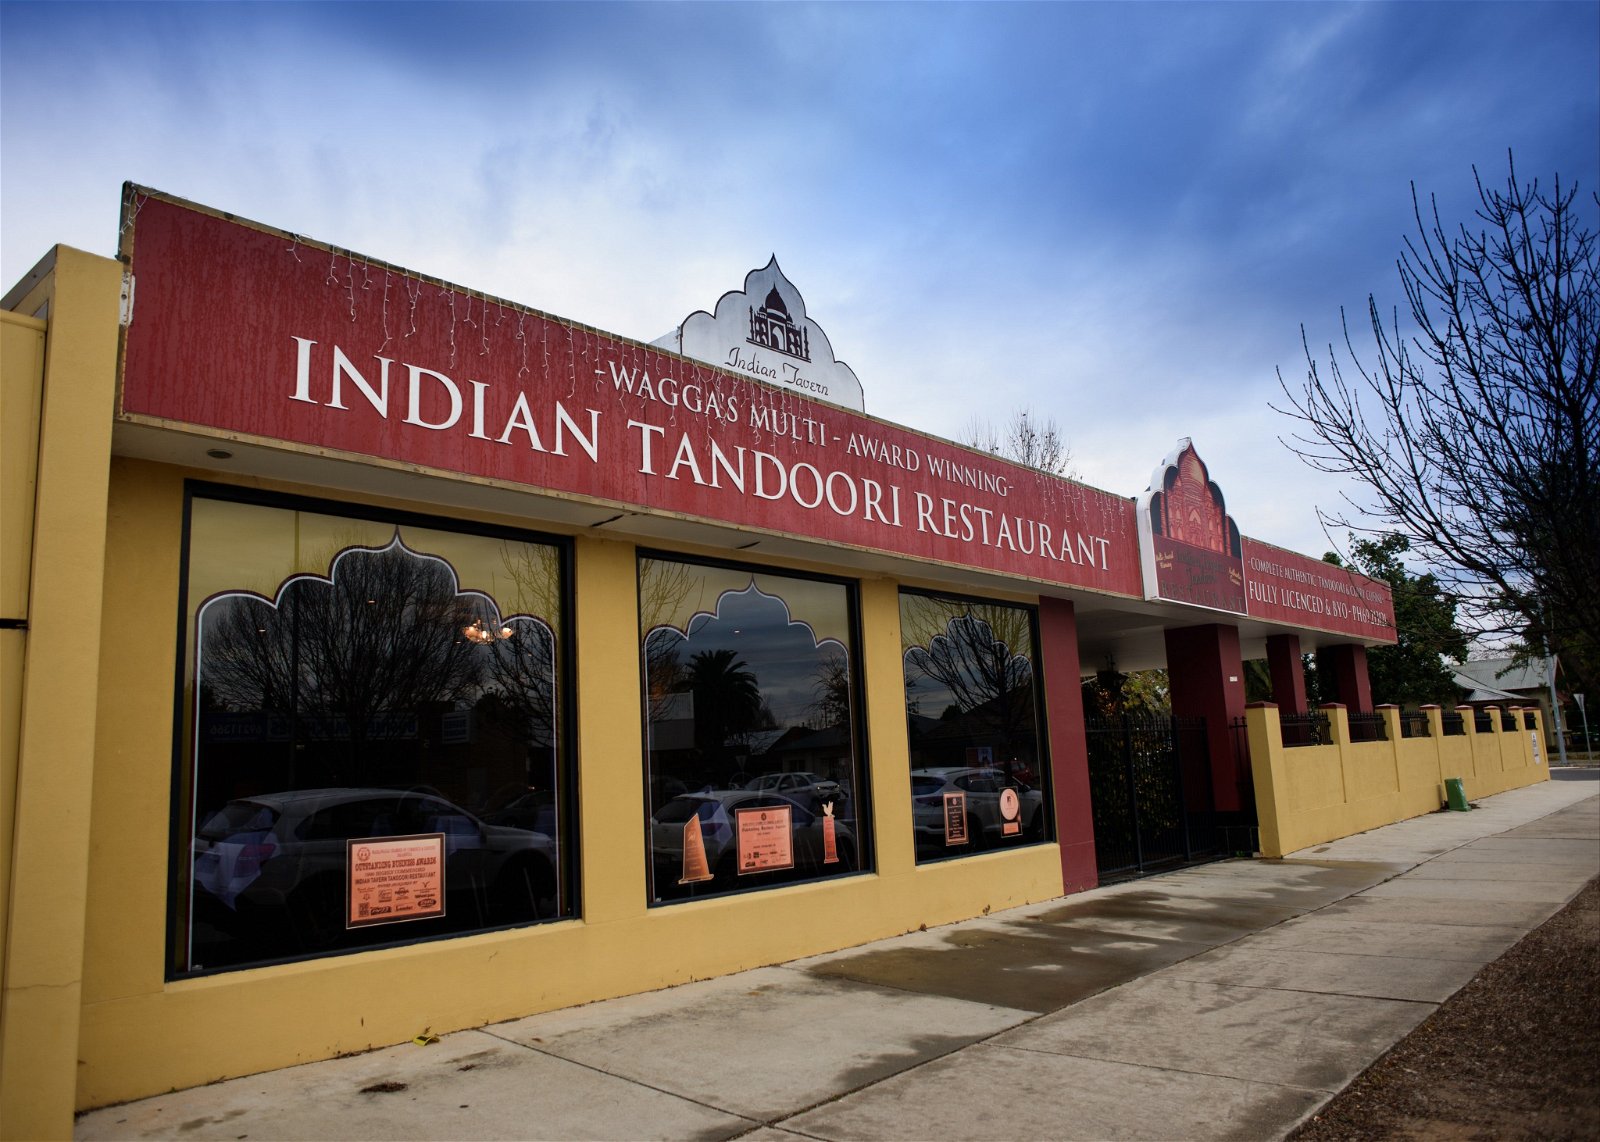 Indian Tavern Tandoori - Surfers Paradise Gold Coast